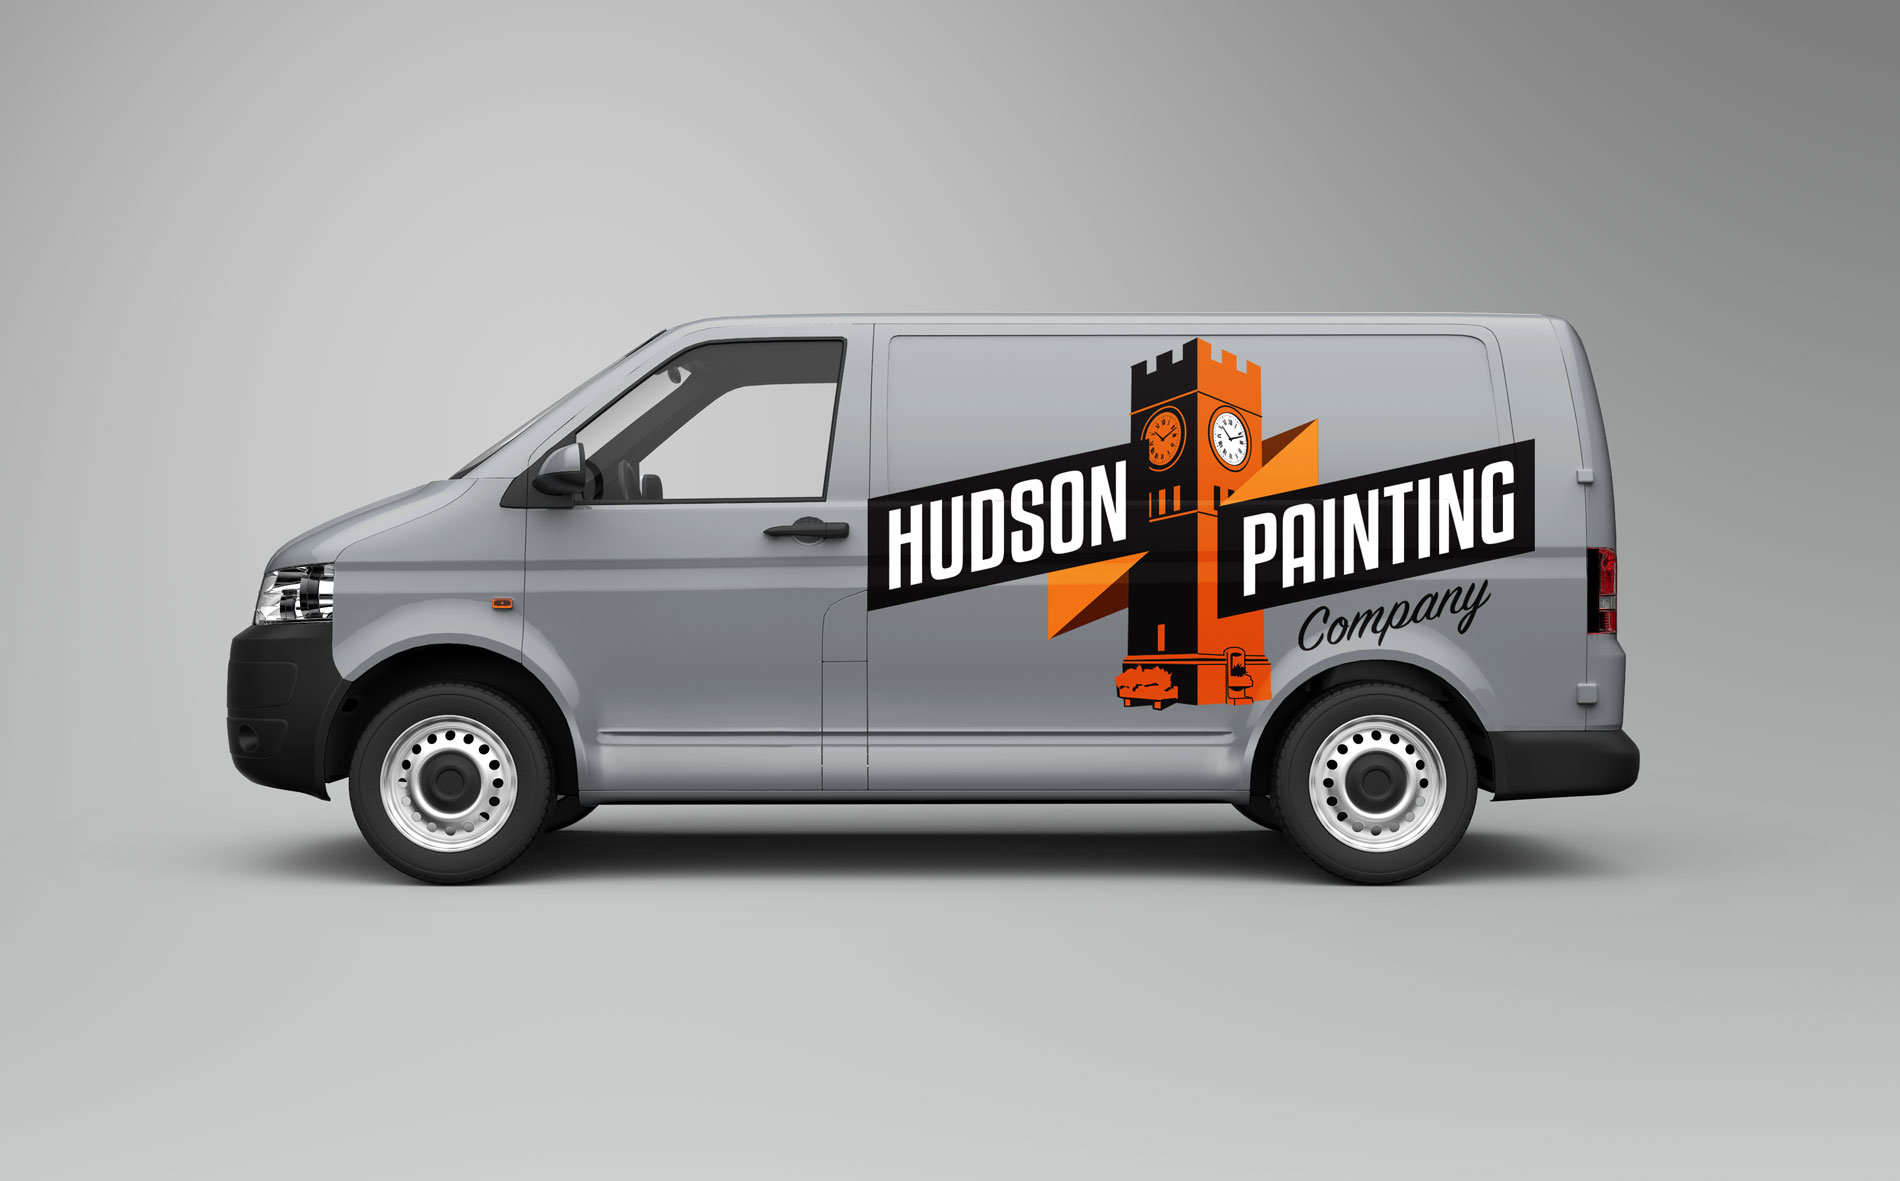 Hudson Painting logo